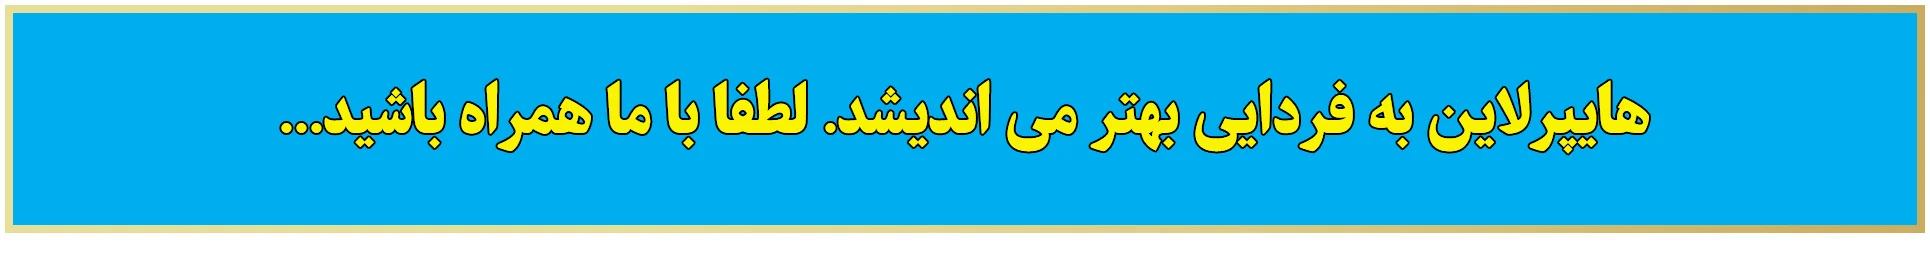 banner-bashgah-moshtarian2